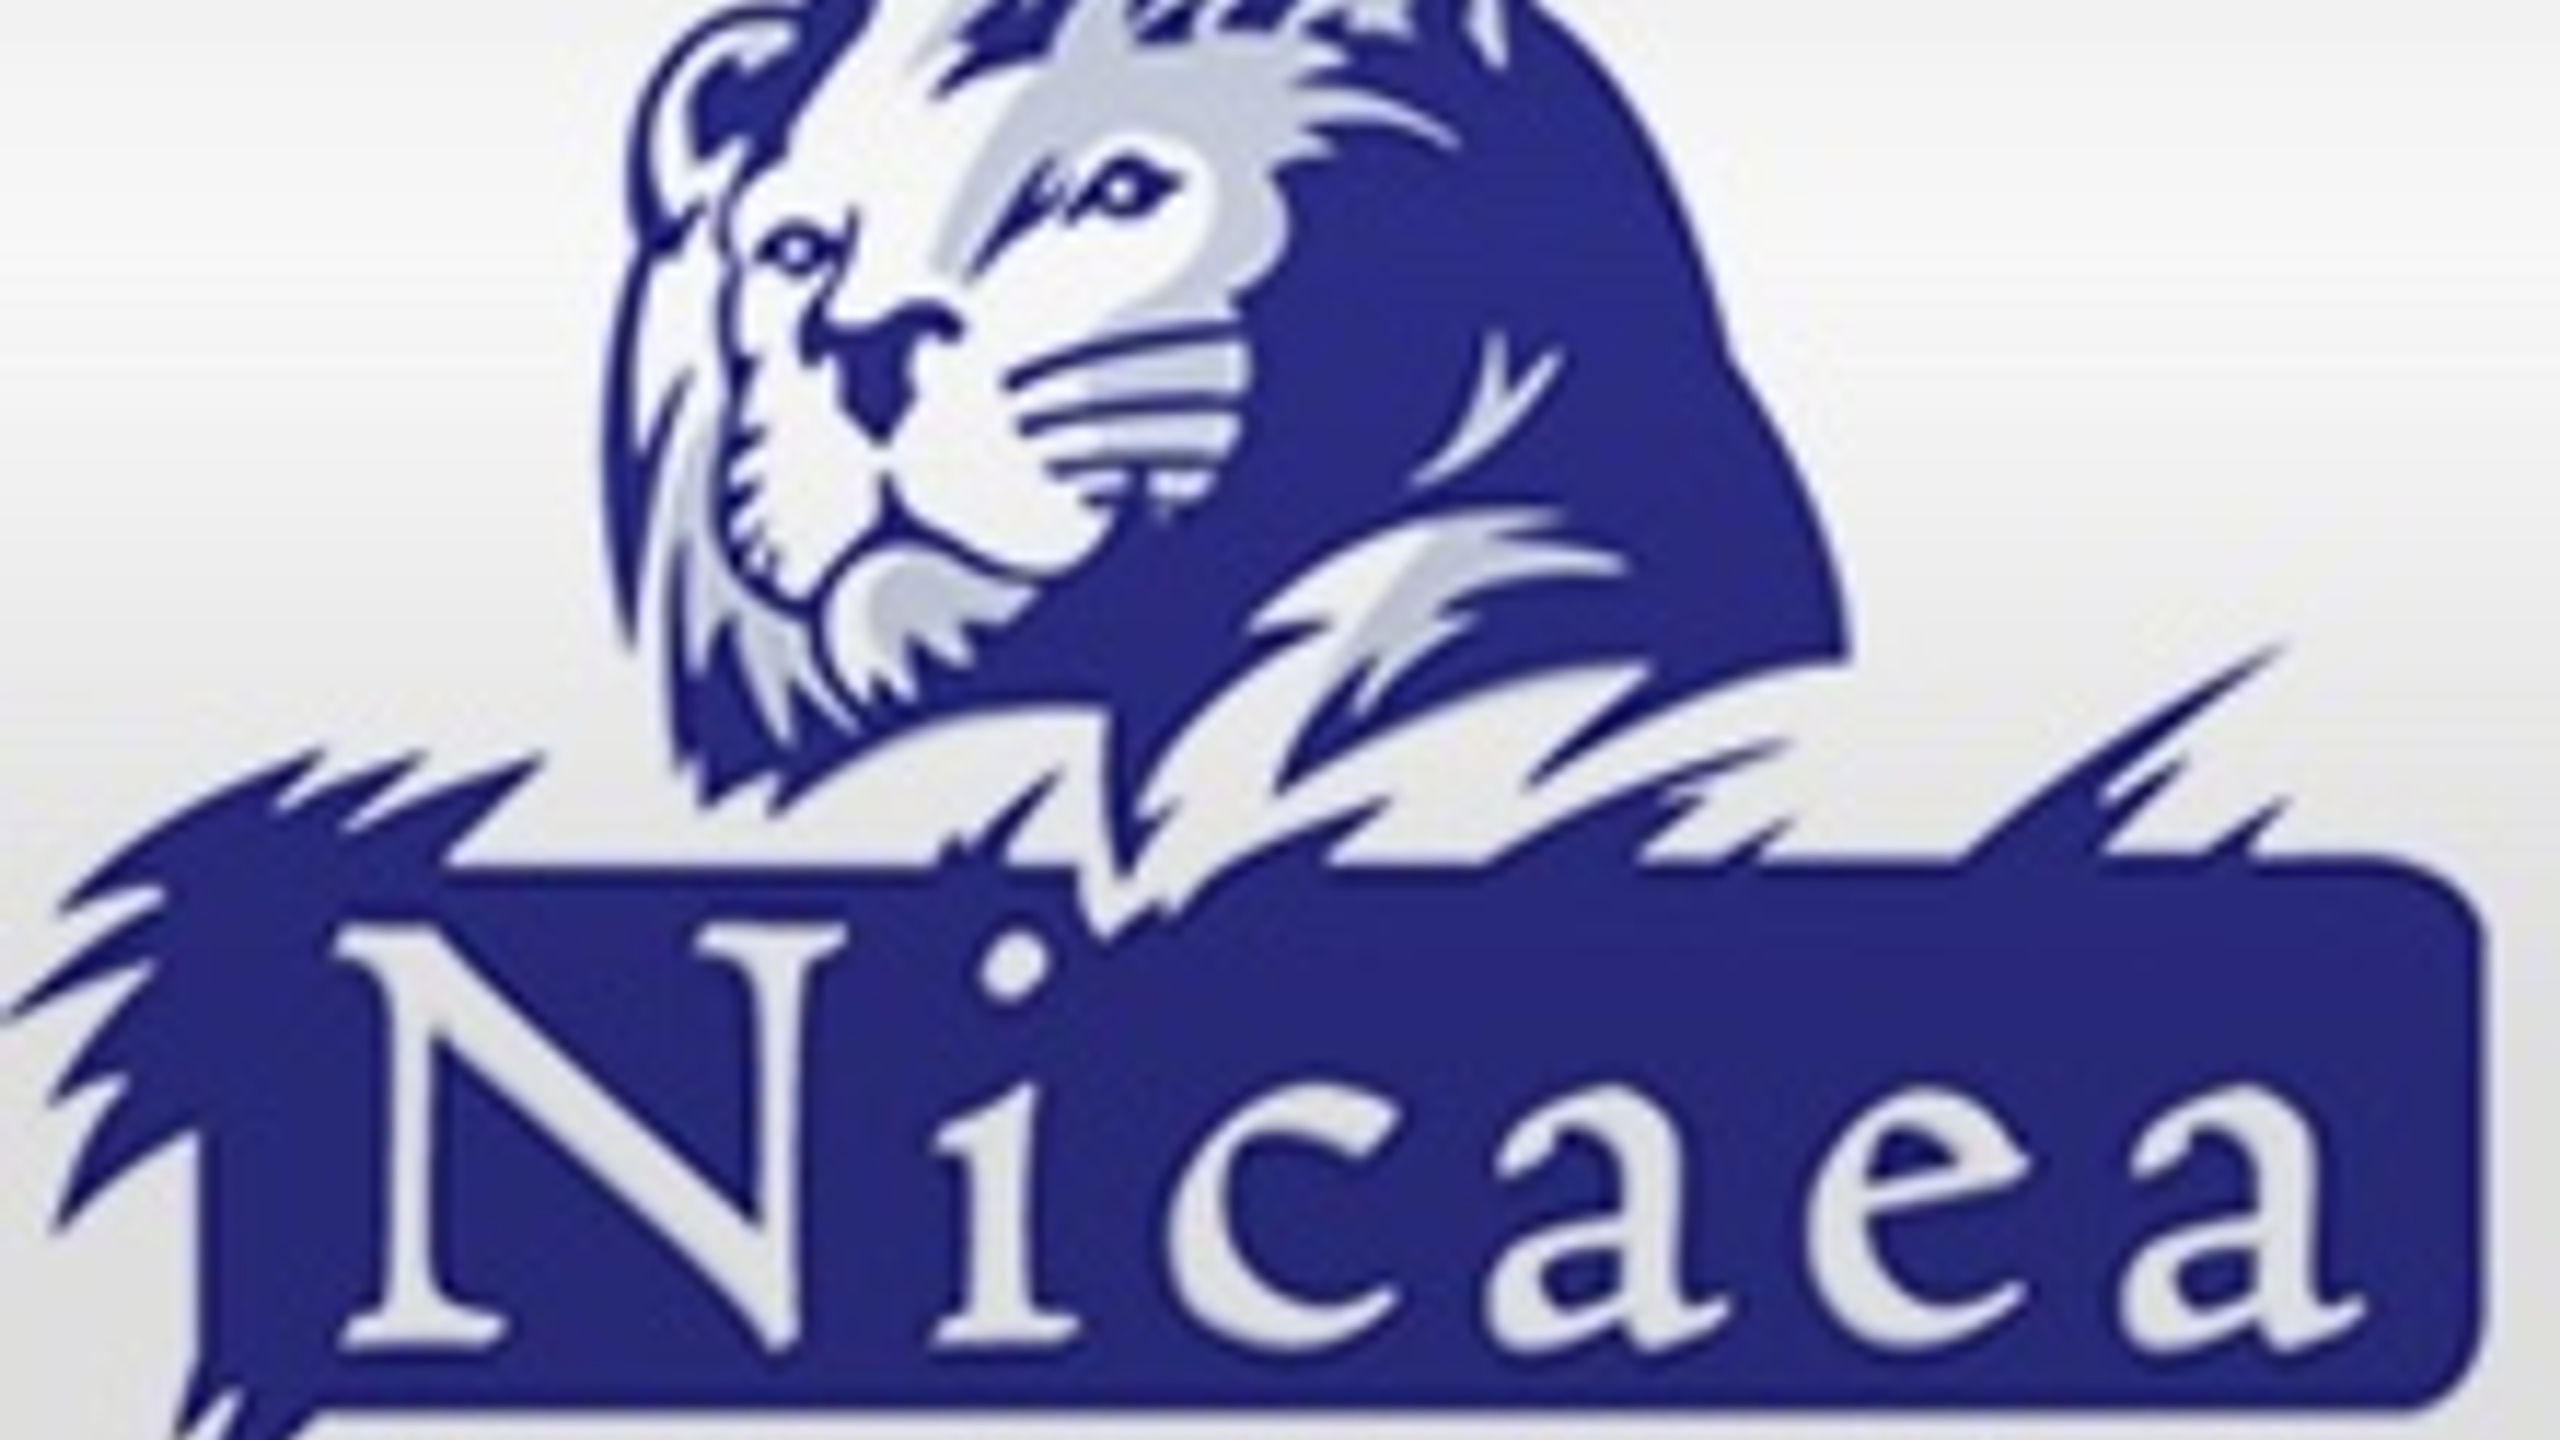 All Nicaea Academy Videos